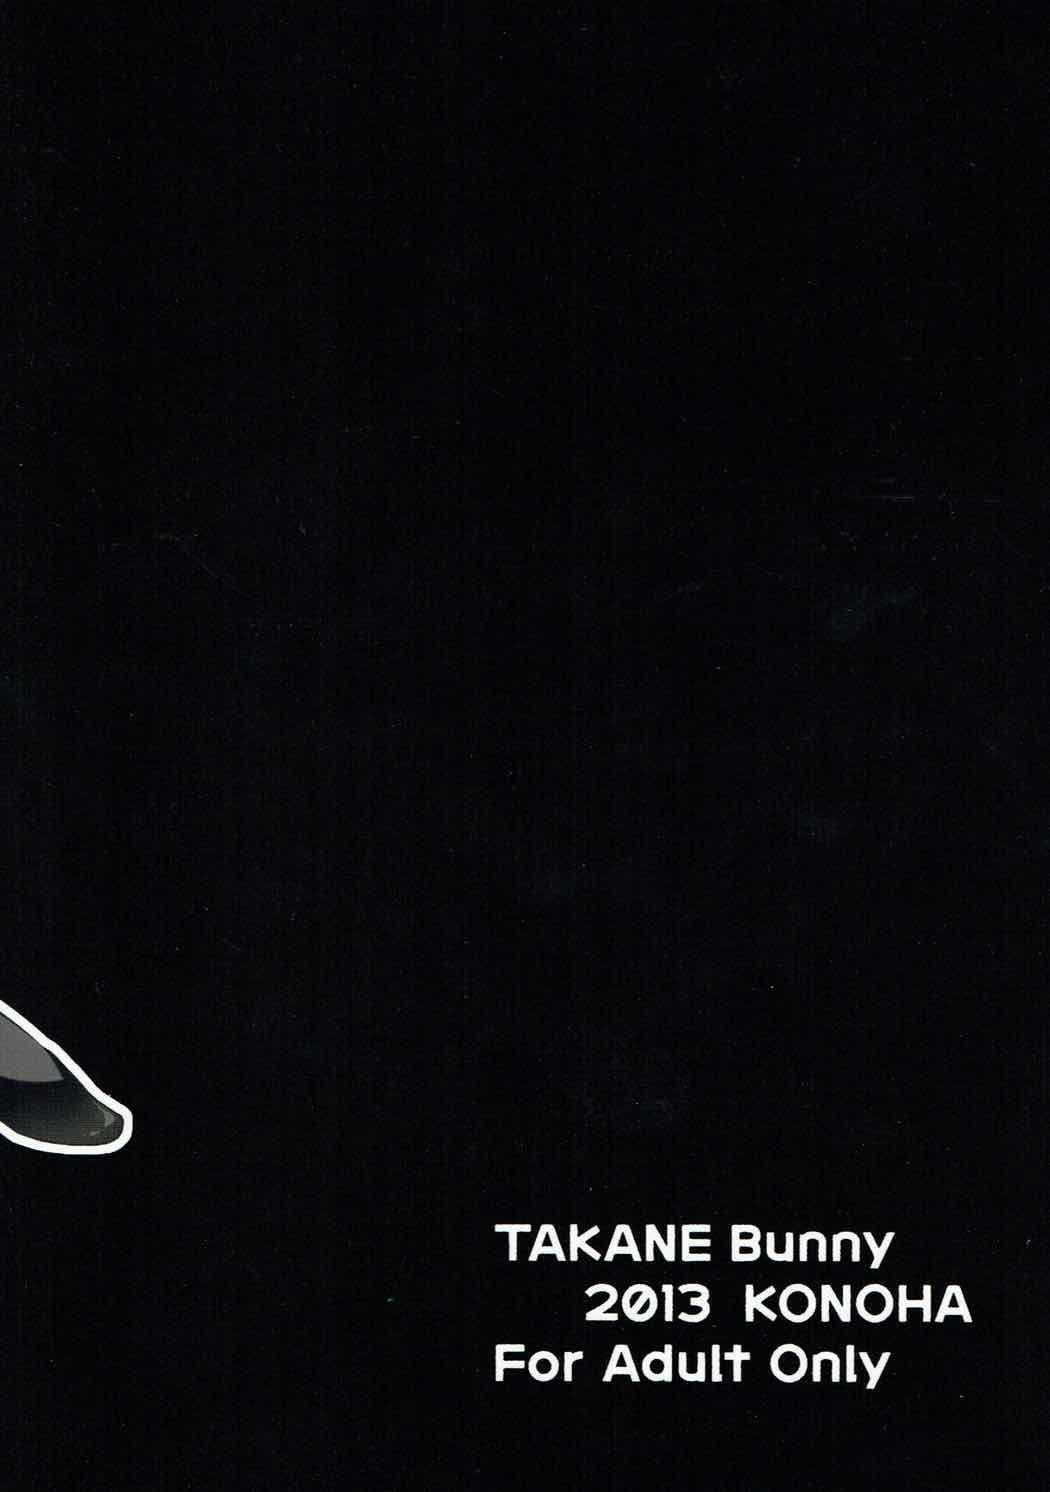 Takane Bunny 13